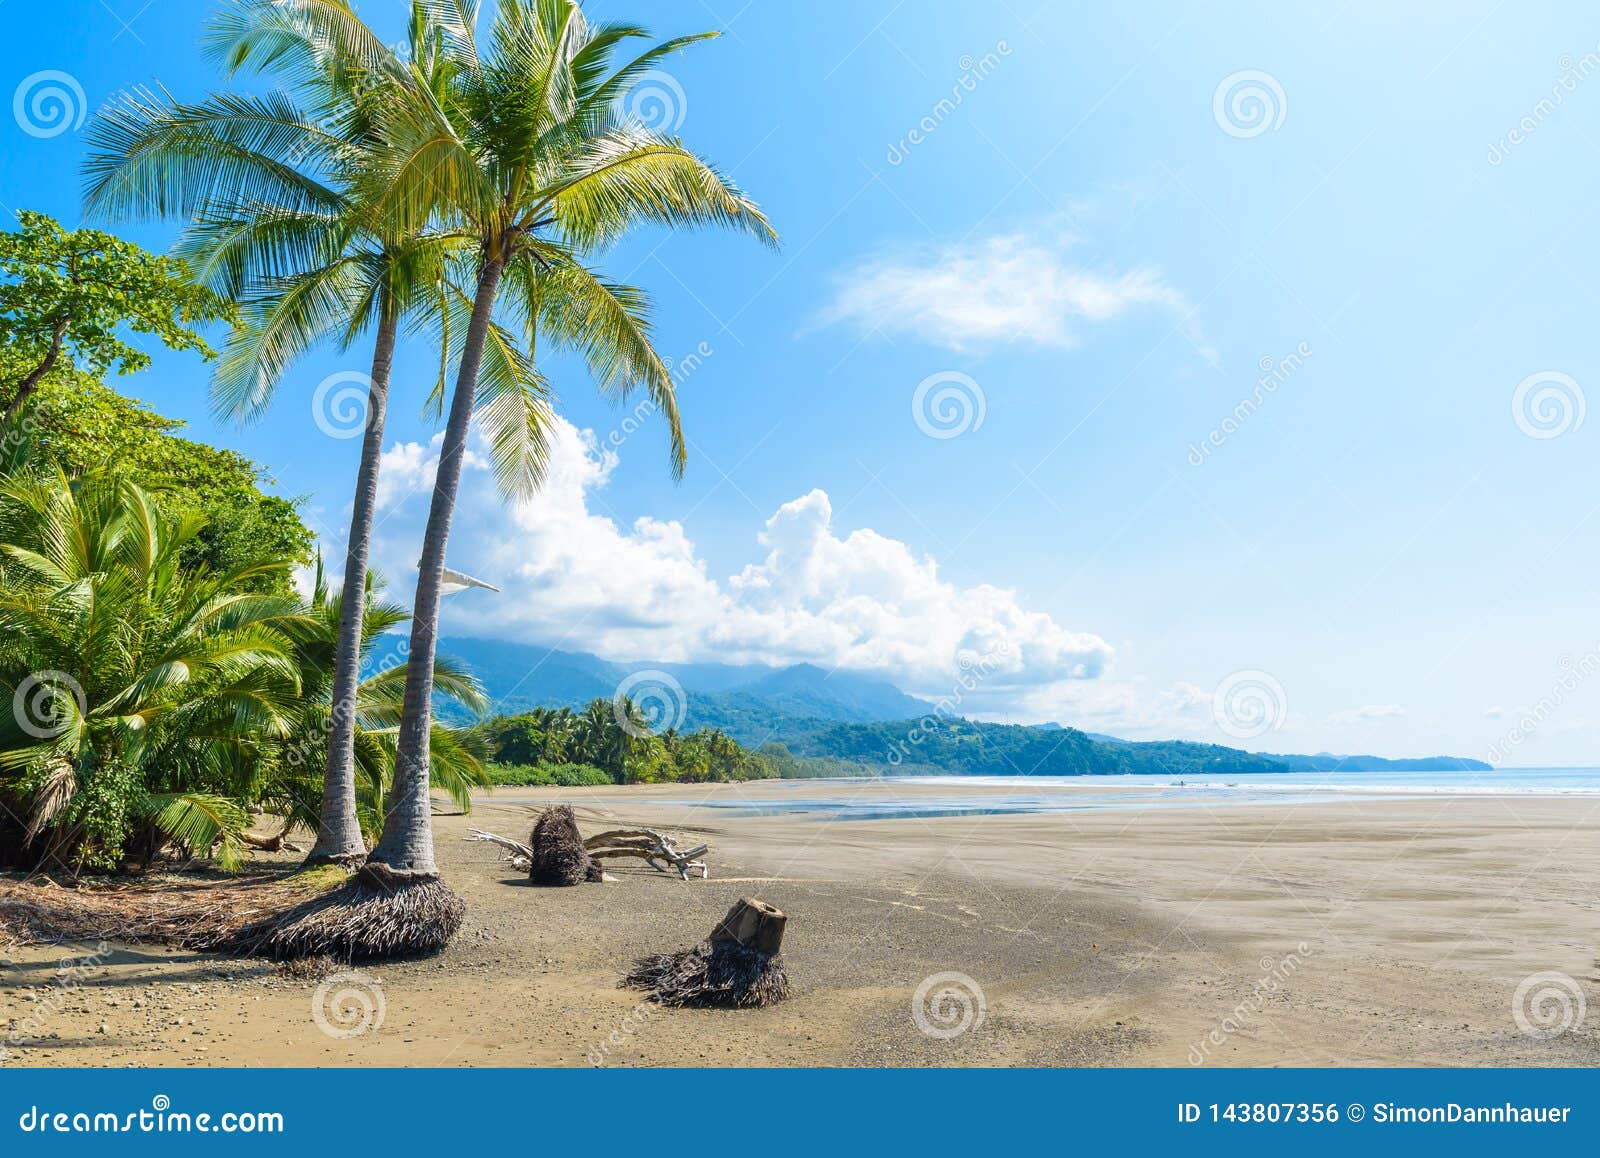 marino ballena national park in uvita - punta uvita - beautiful beaches and tropical forest at pacific coast of costa rica